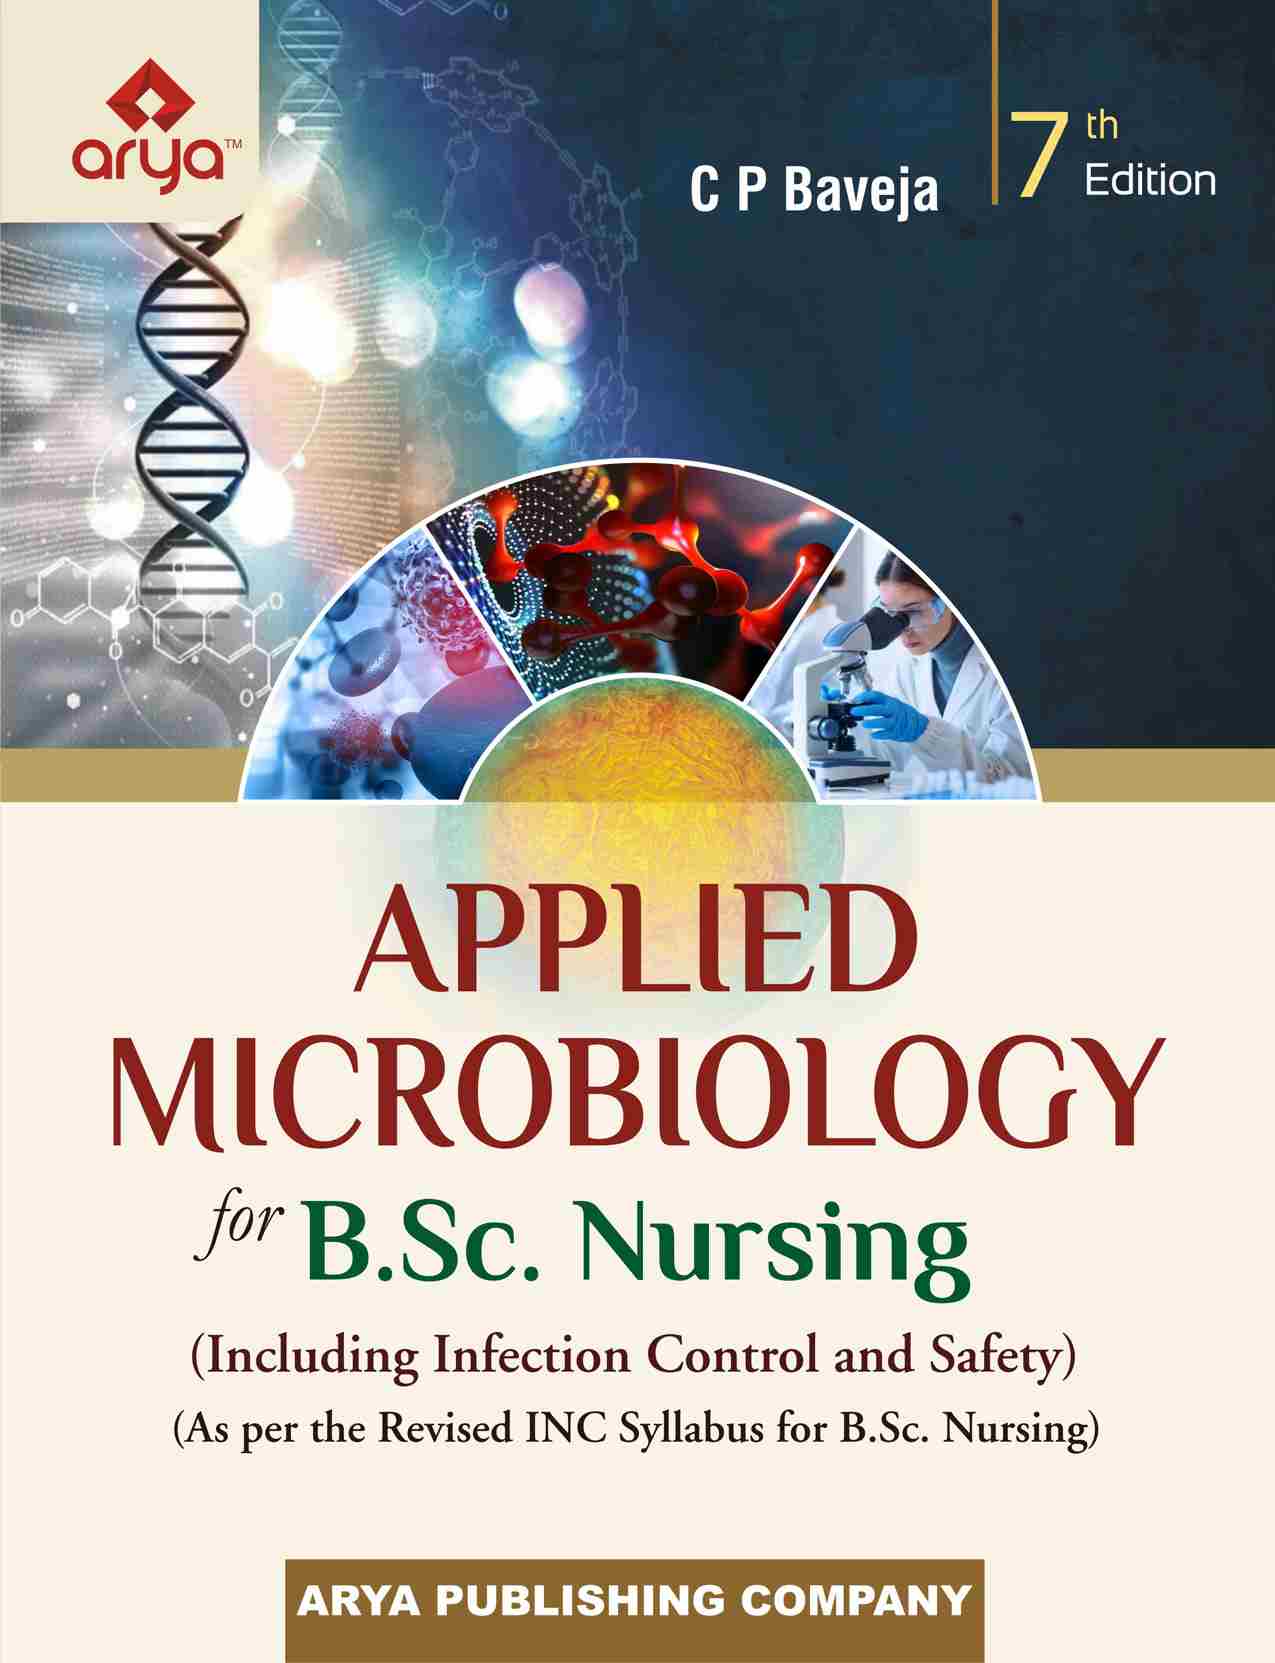 Applied Microbiology for B.Sc. Nursing